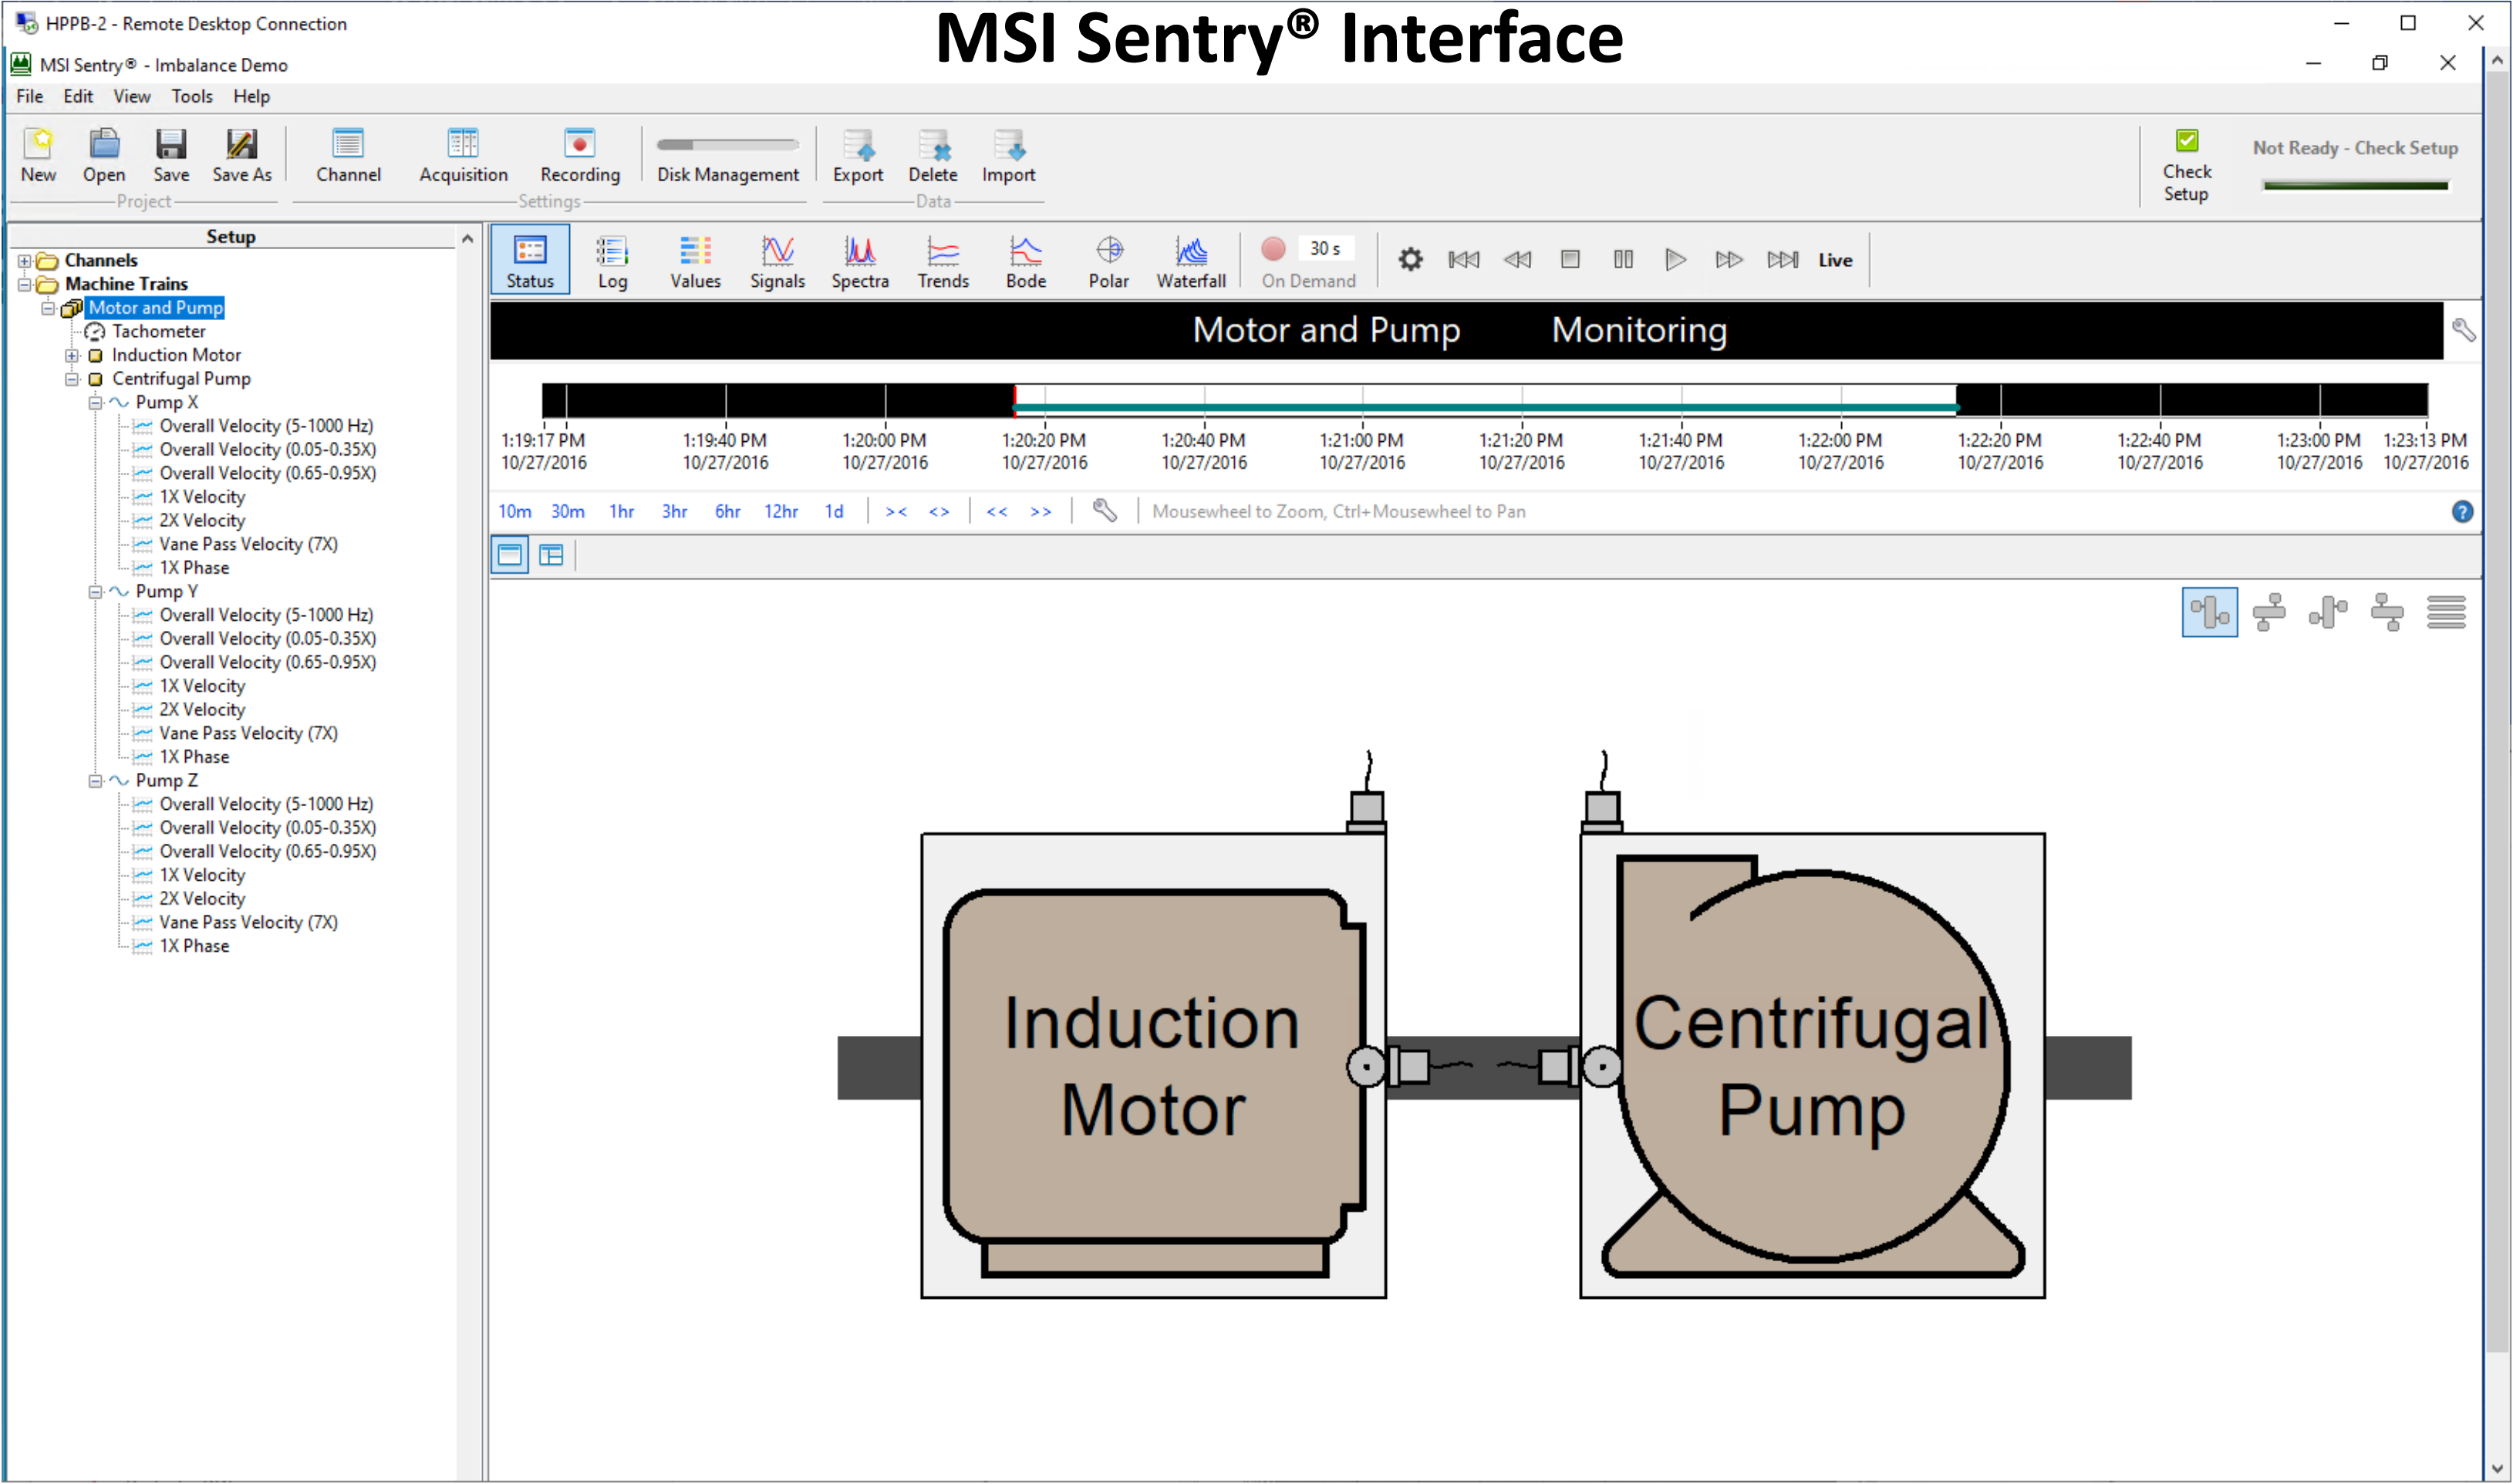 MSI Sentry Interface